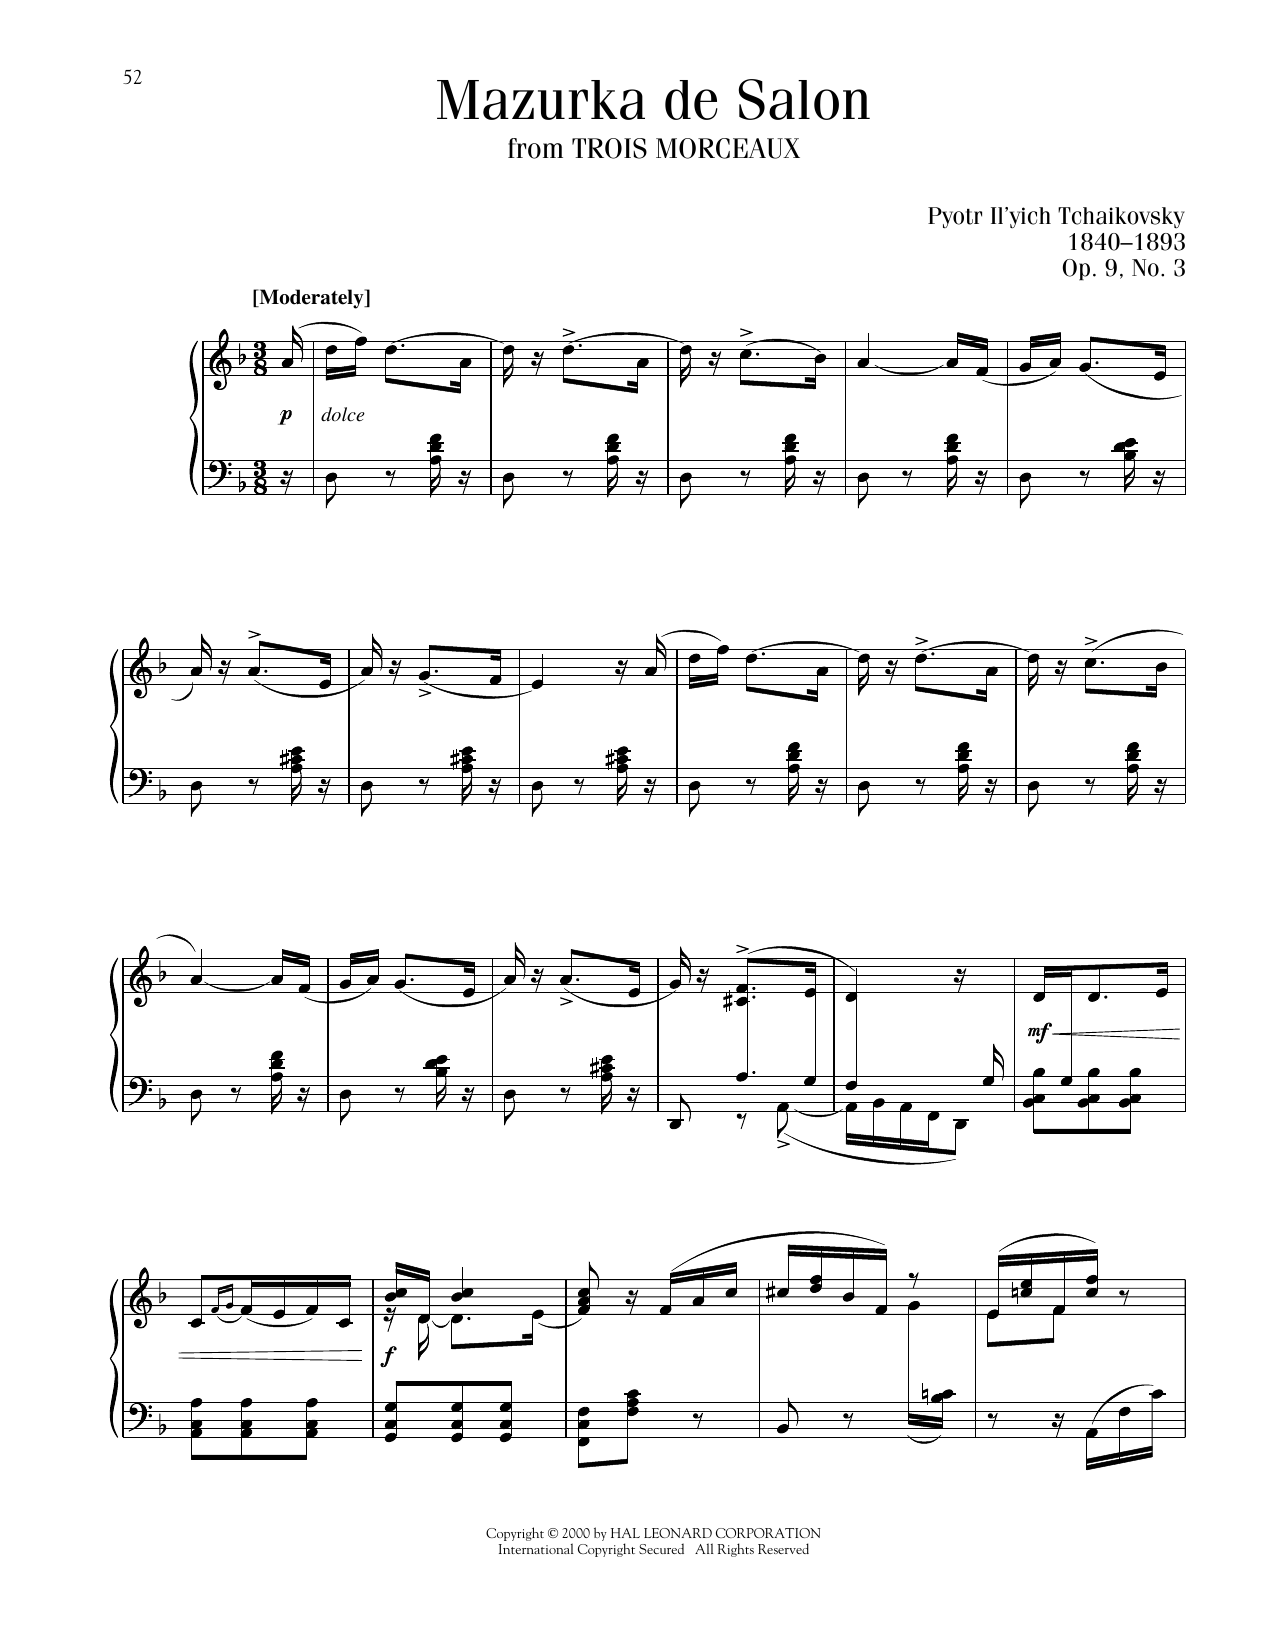 Pyotr Il'yich Tchaikovsky Mazurka De Salon, Op. 9, No. 3 sheet music notes printable PDF score